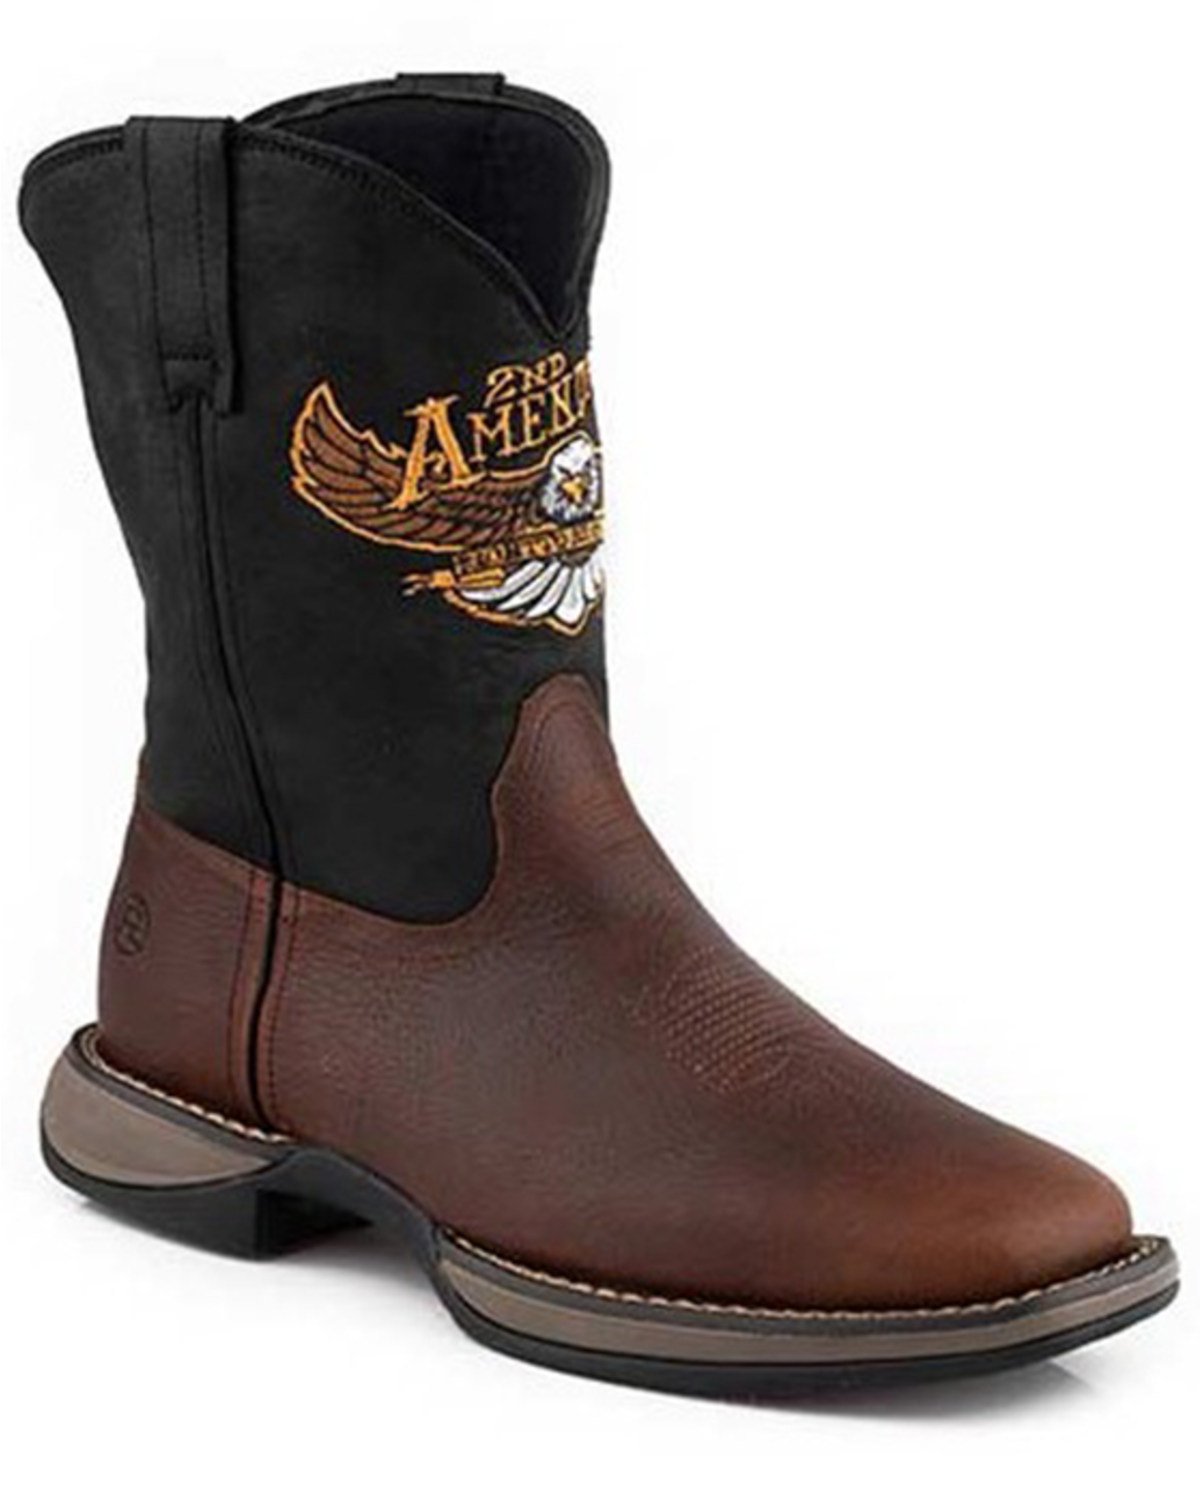 Roper Men's Wilder 2nd Amendment Western Boots - Broad Square Toe